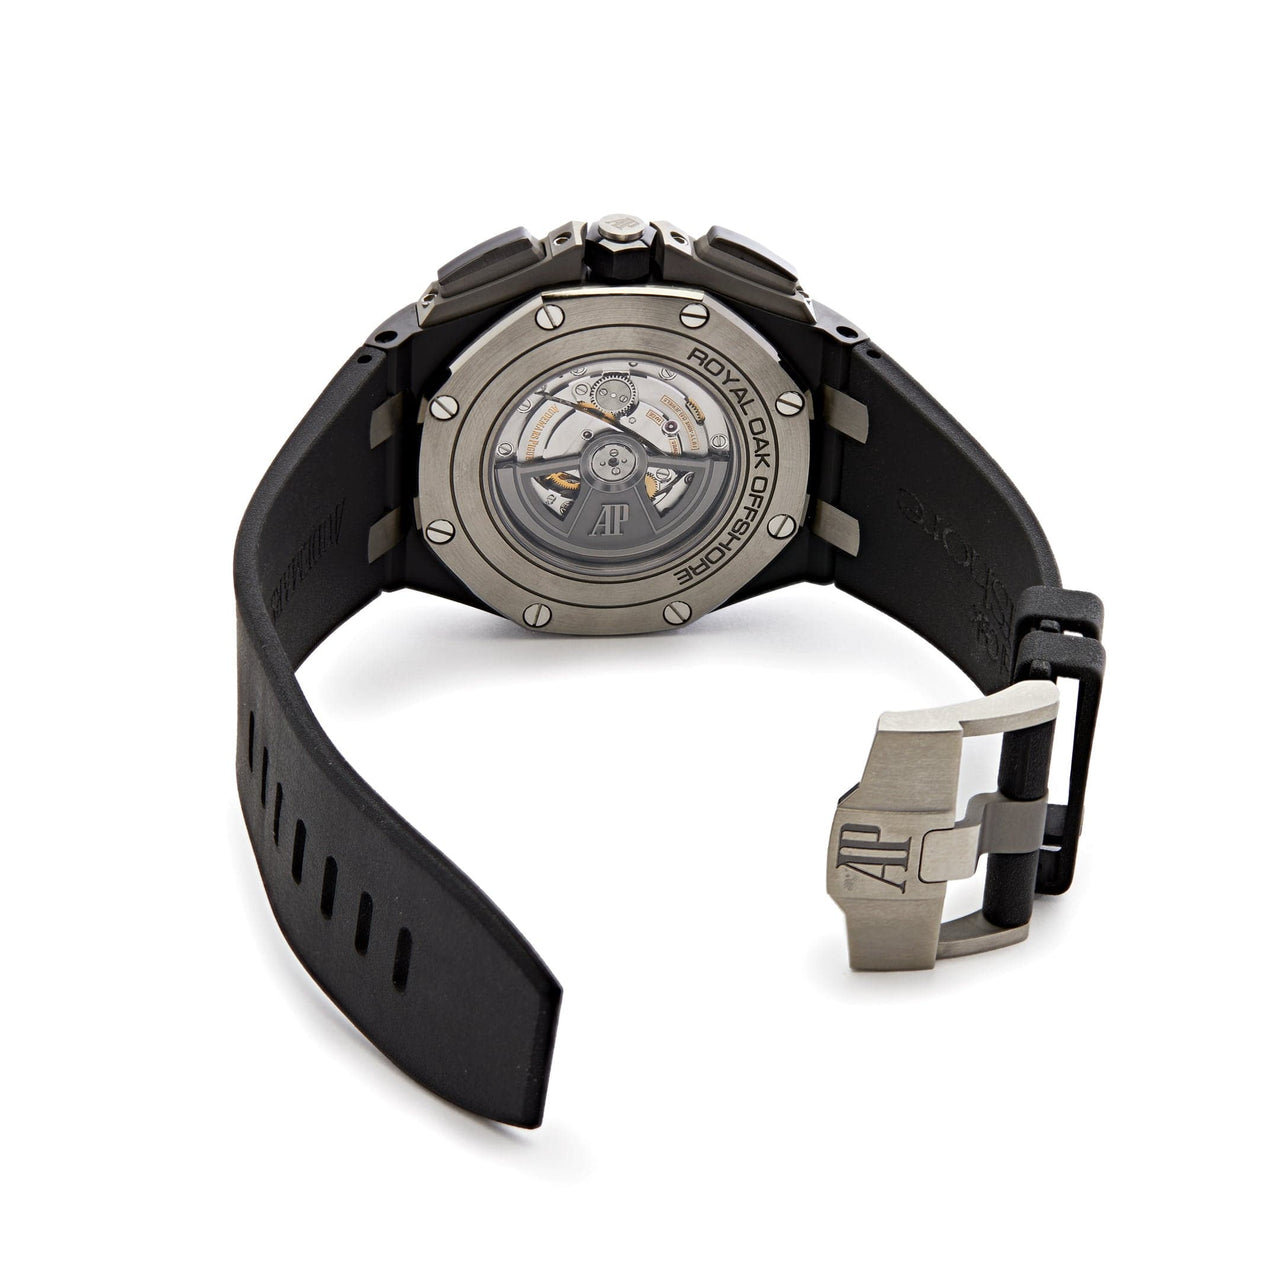 Luxury Watch Audemars Piguet Royal Oak Offshore Selfwinding Chronograph Black Ceramic 26405CE.OO.A002CA.02 Wrist Aficionado